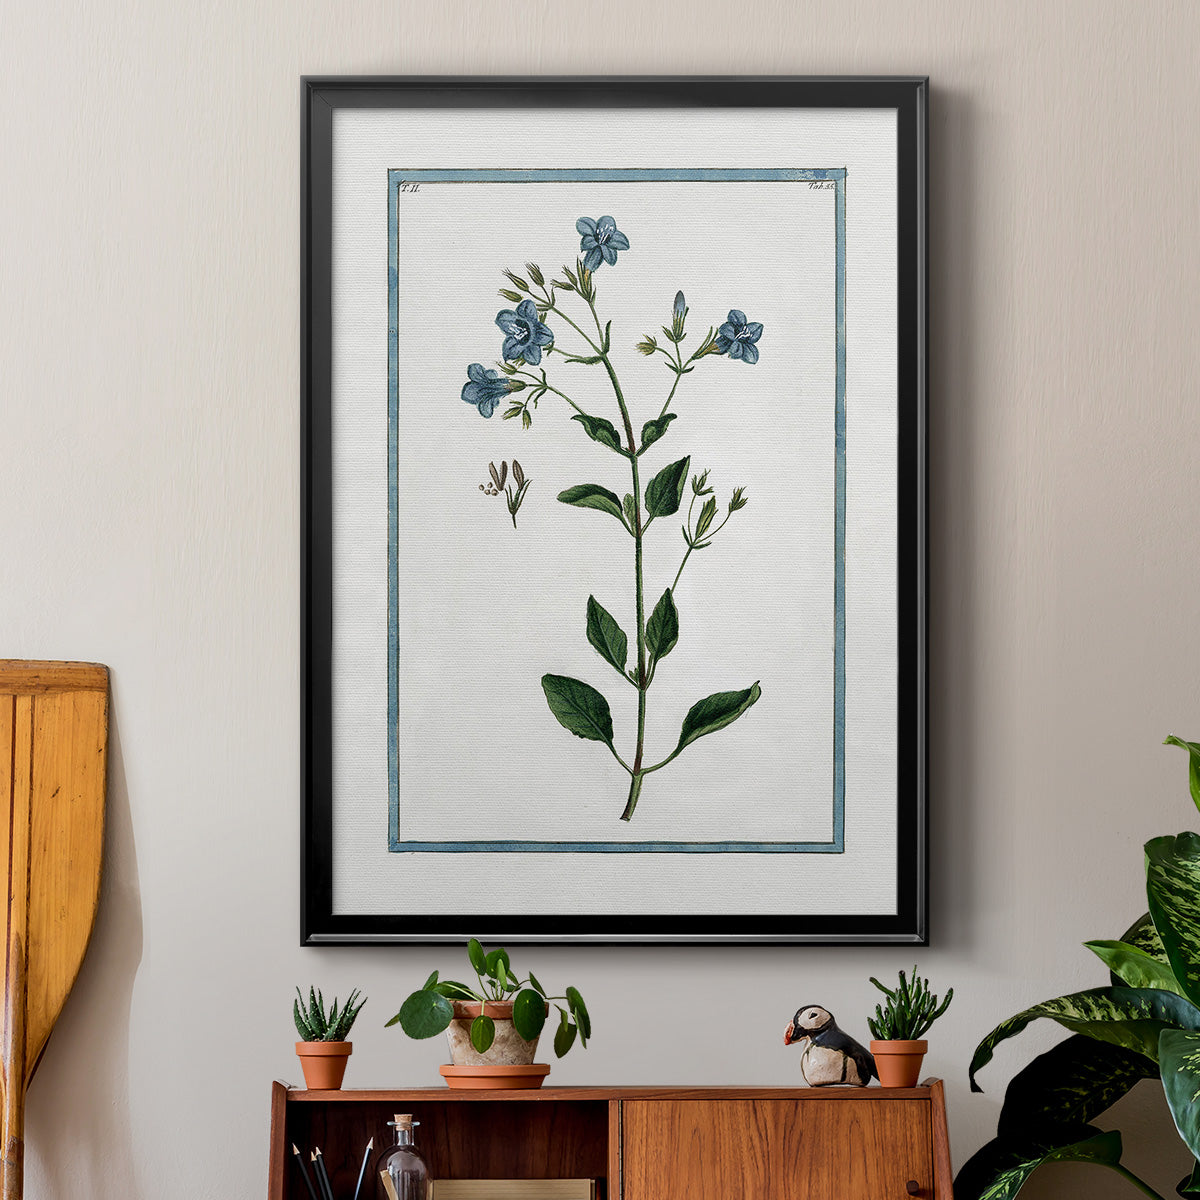 Shabby Chic Botanical II Premium Framed Print - Ready to Hang